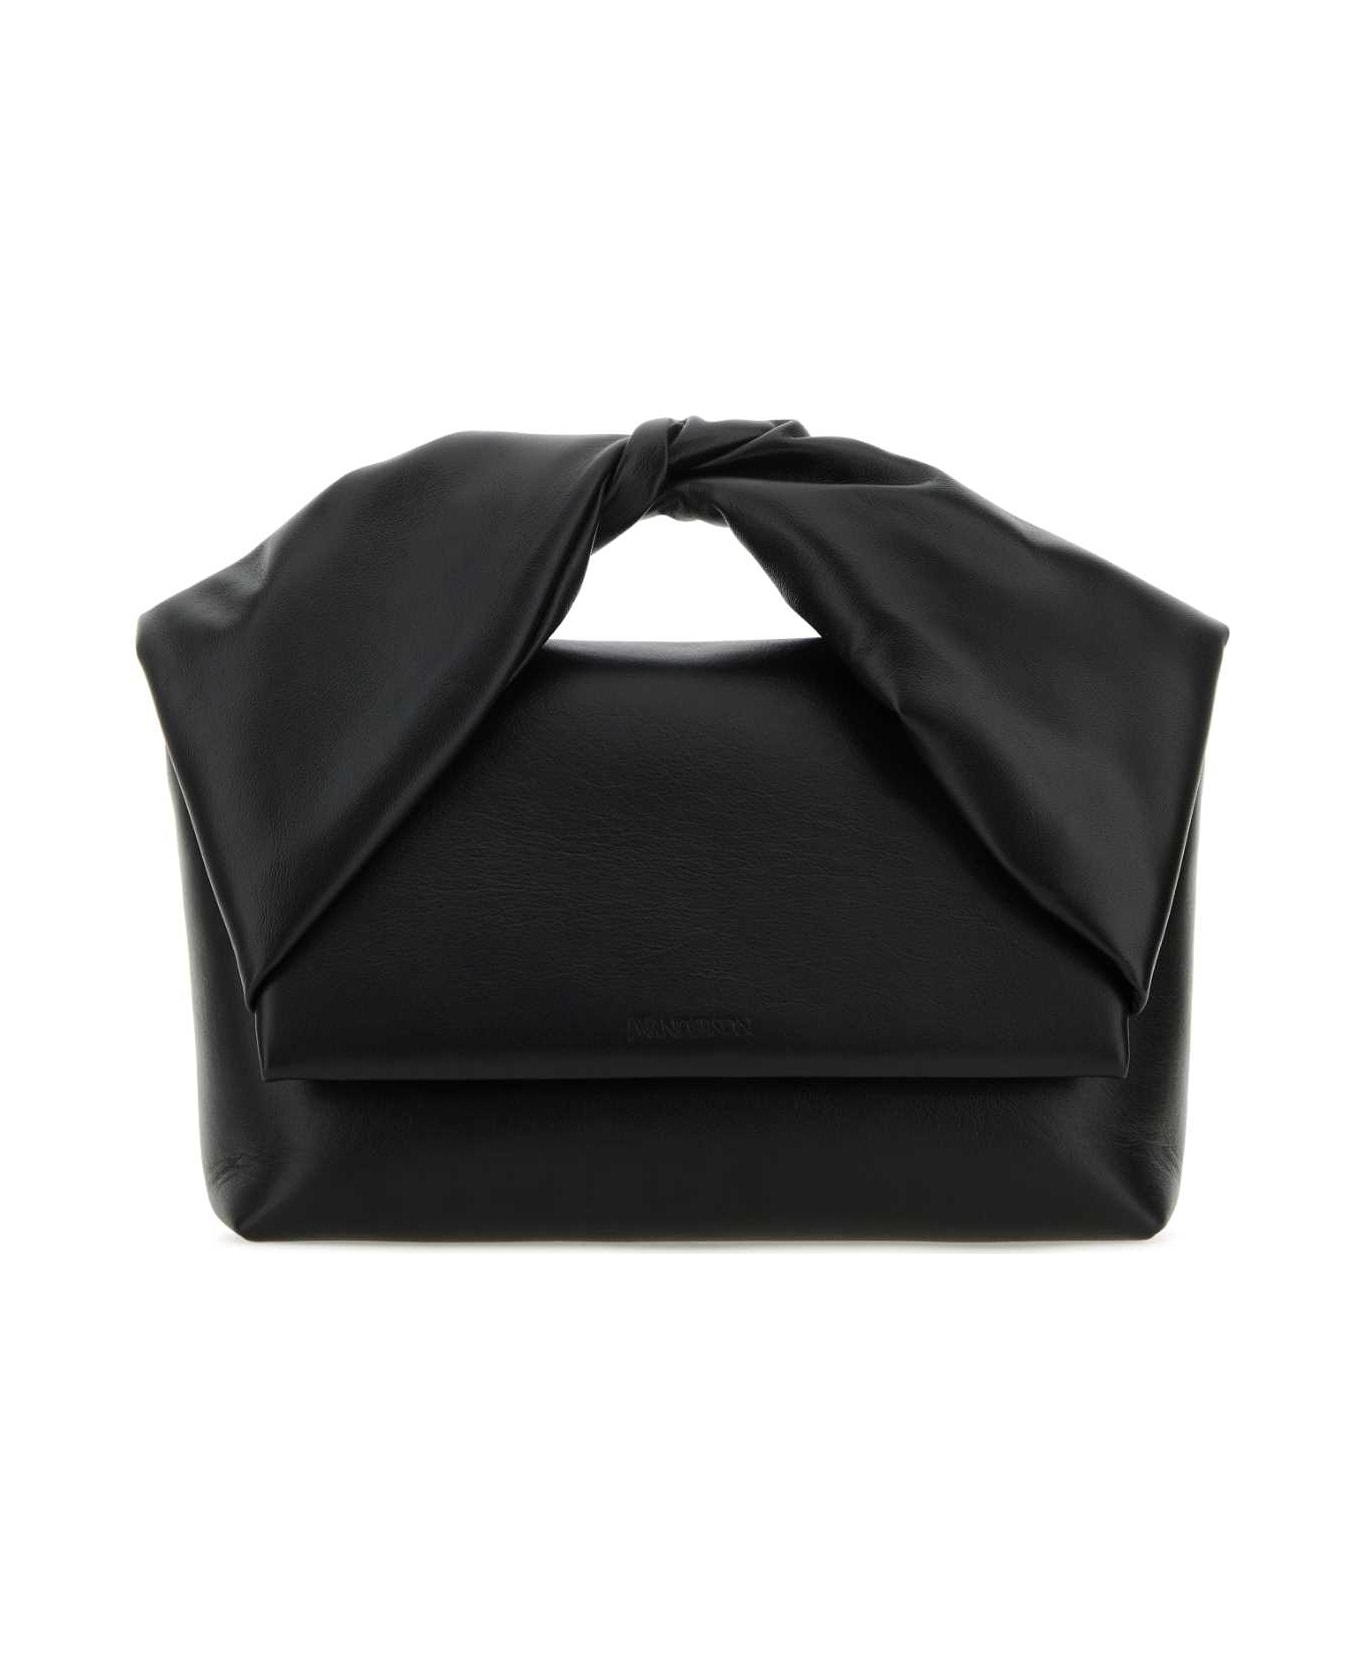 J.W. Anderson Black Leather Bag - Black